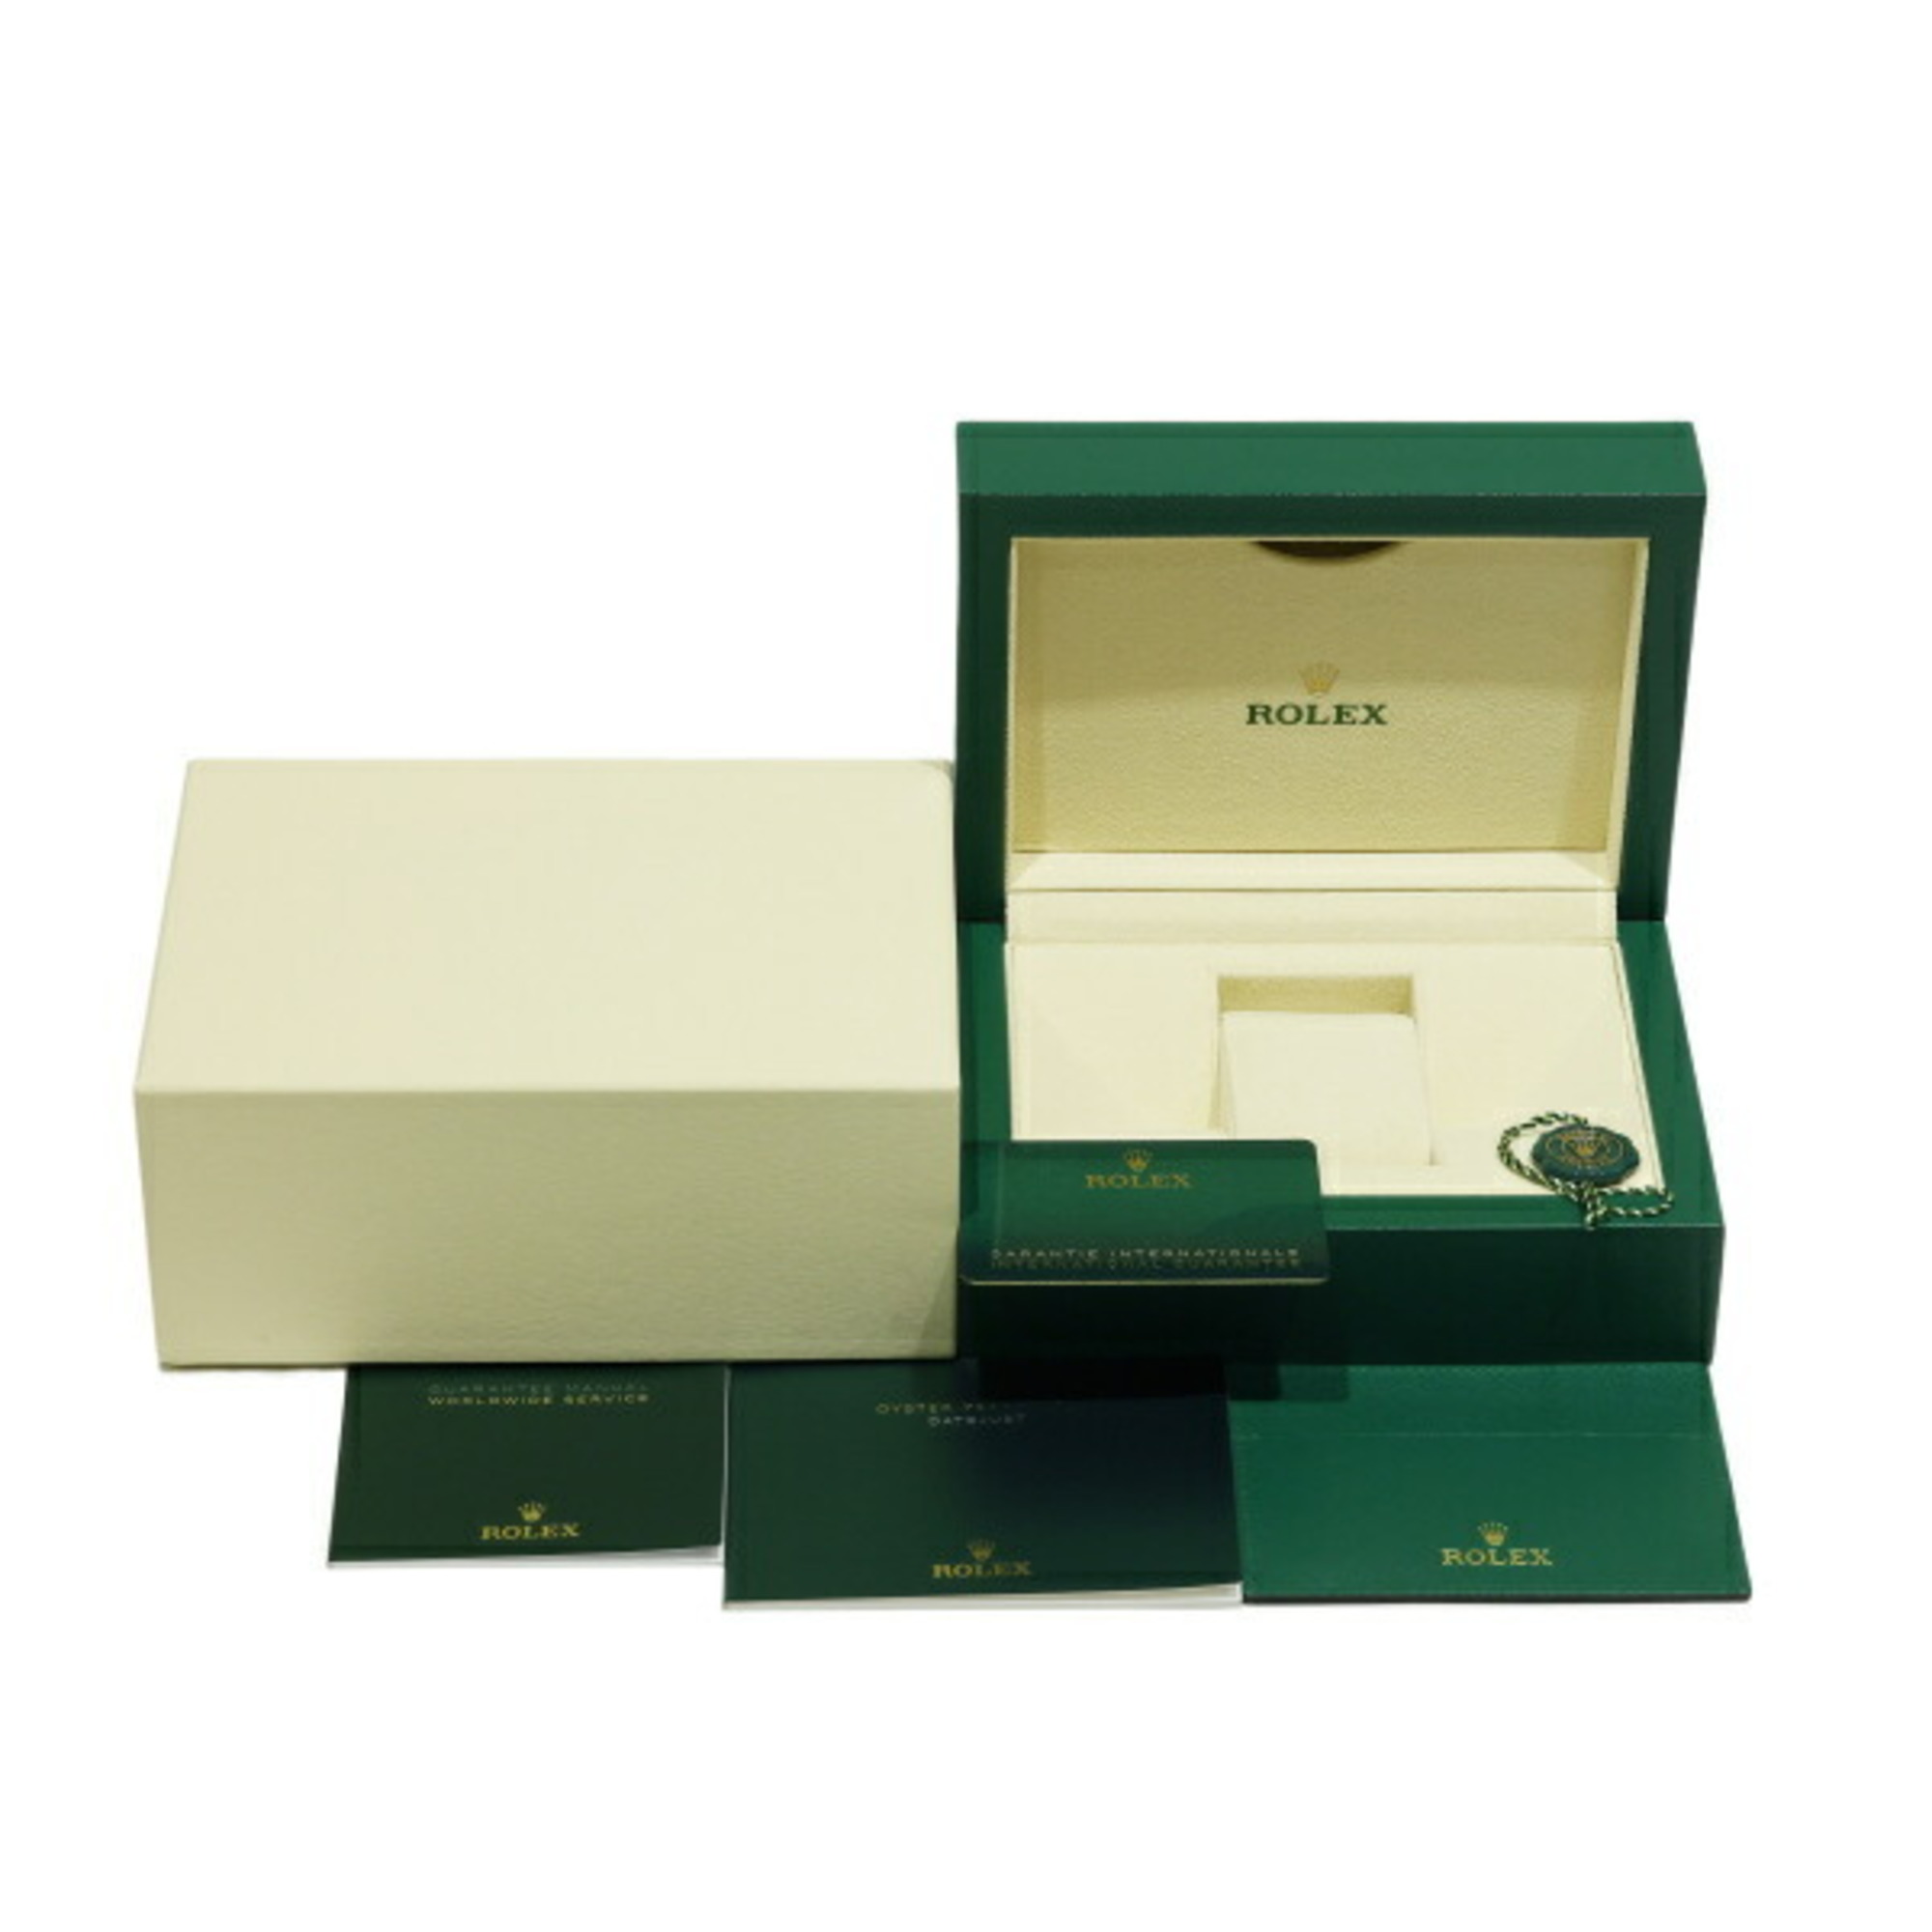 Rolex ROLEX Datejust 36 126234 olive green/bar dial watch men's